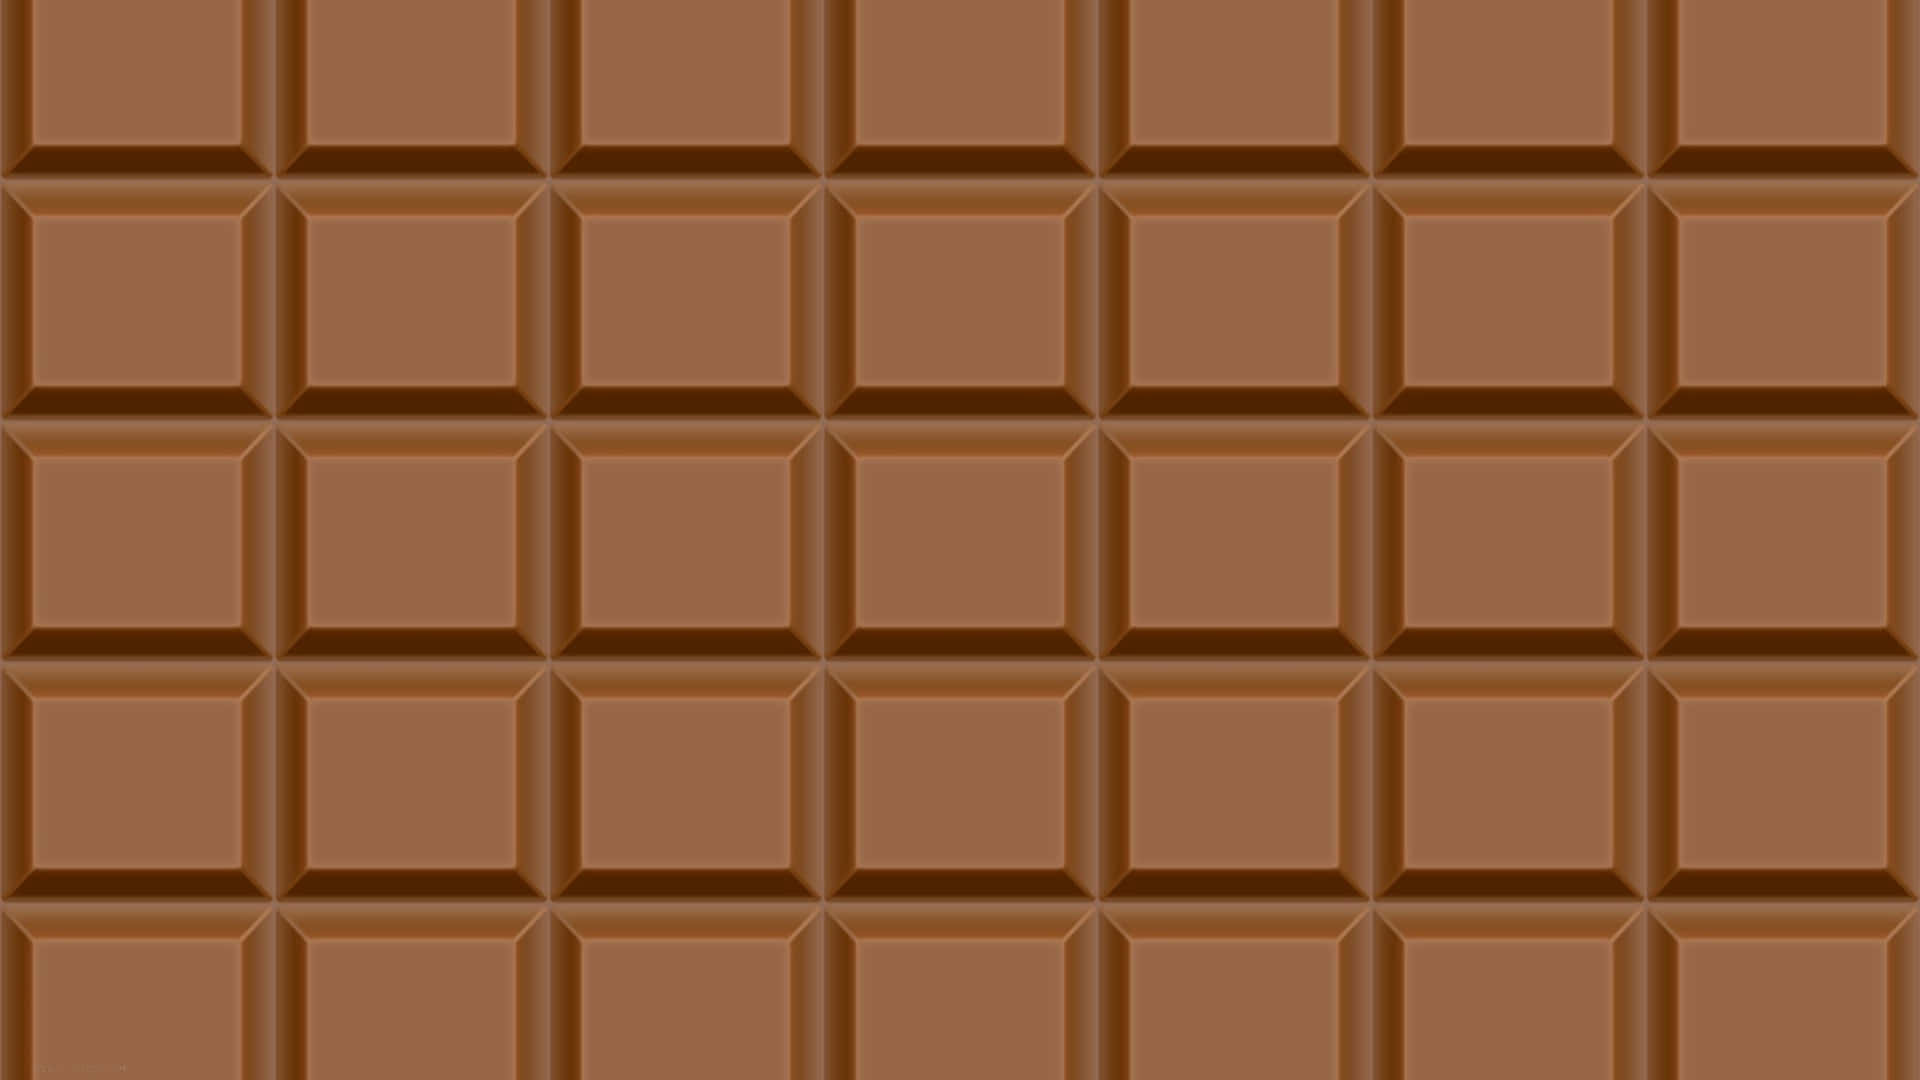 Delicious Brown Chocolate Bars Wallpaper